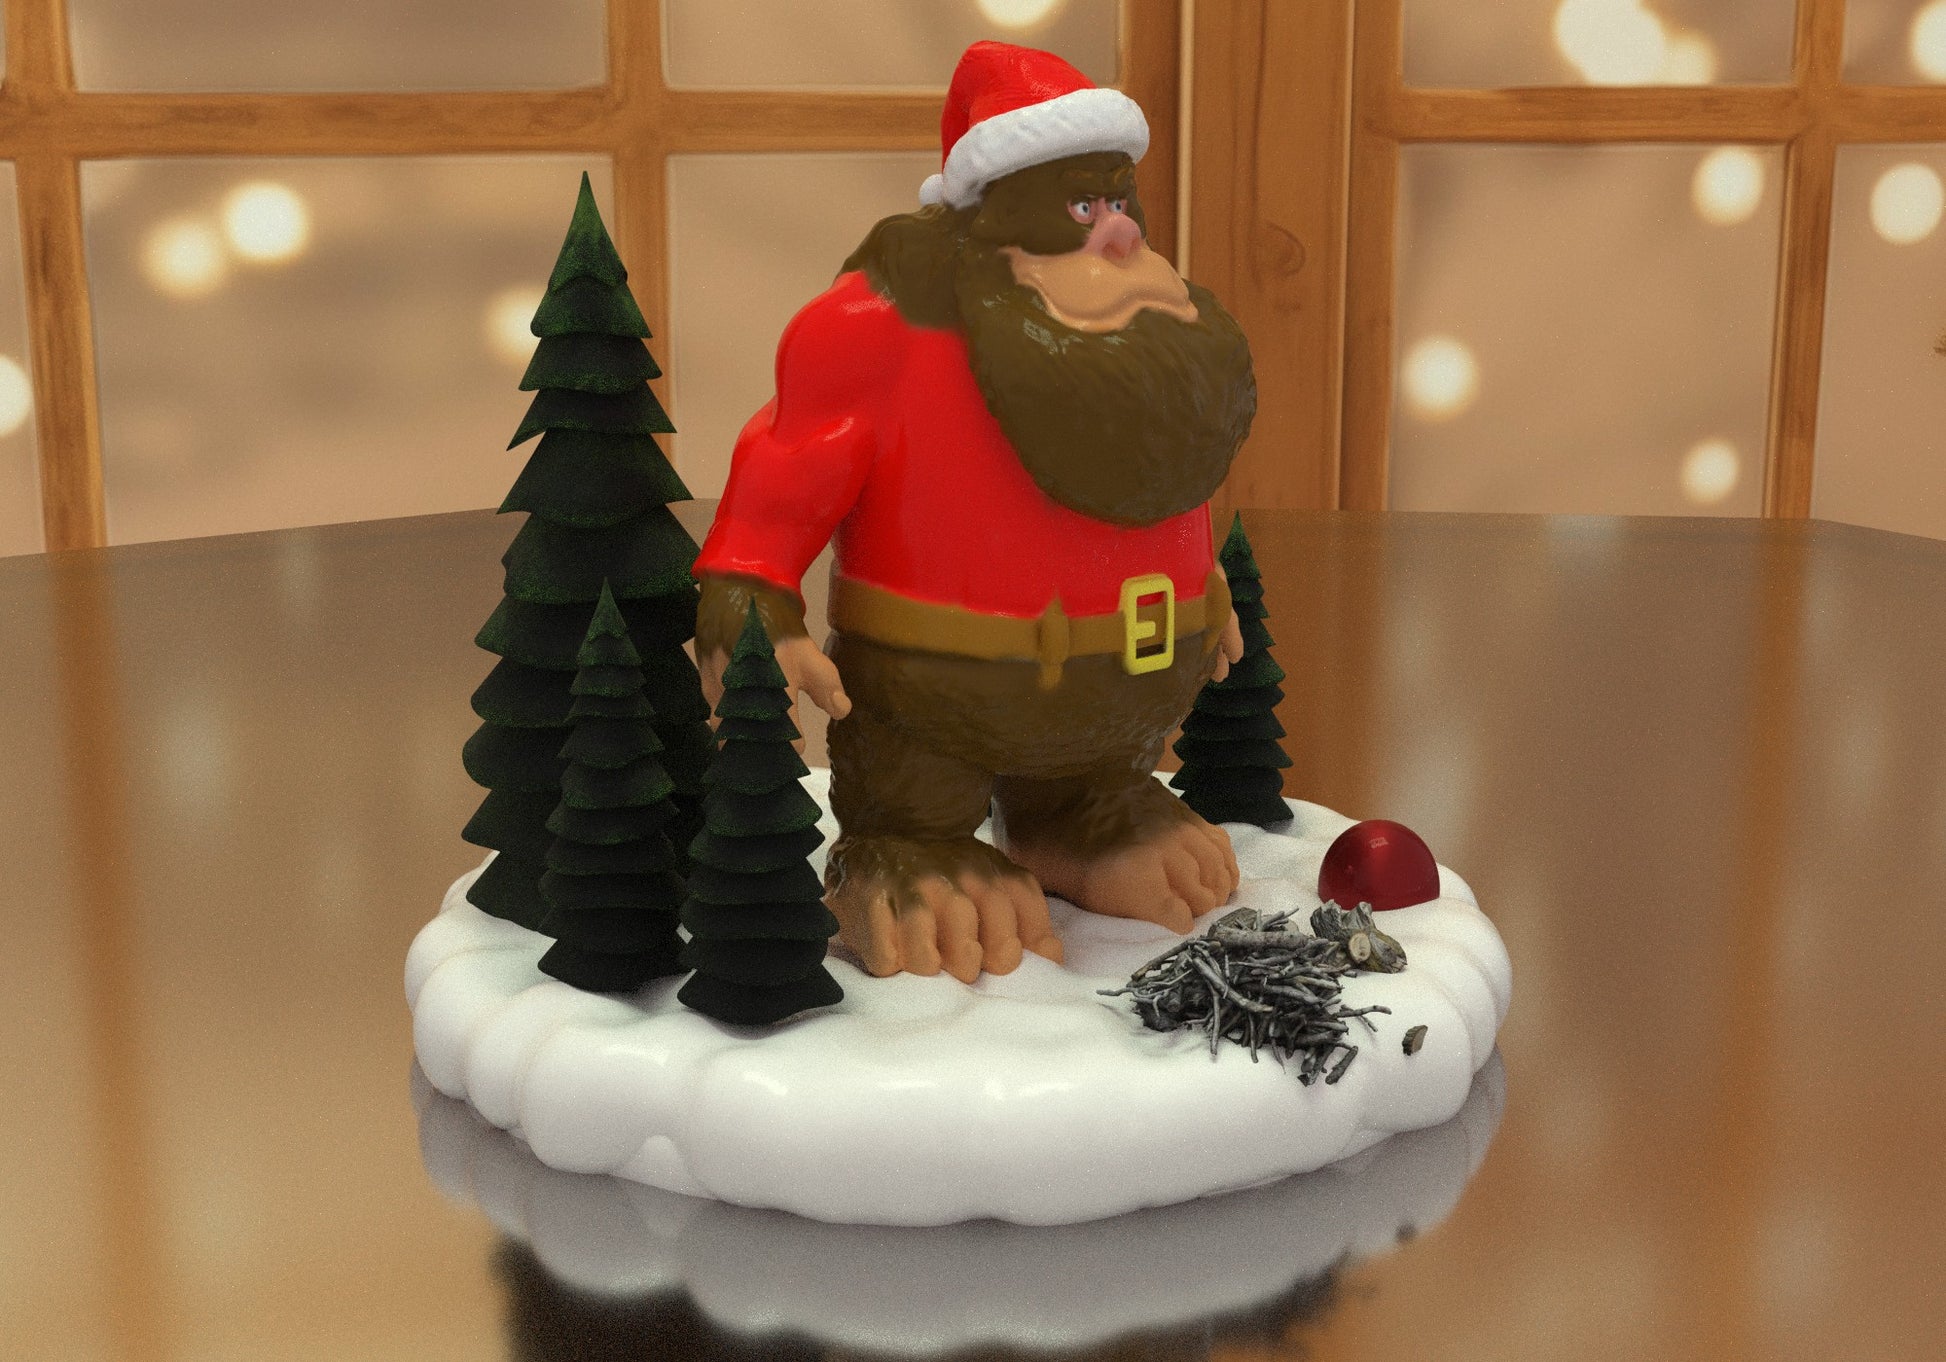 a figurine of a man with a beard and a beard wearing a santa